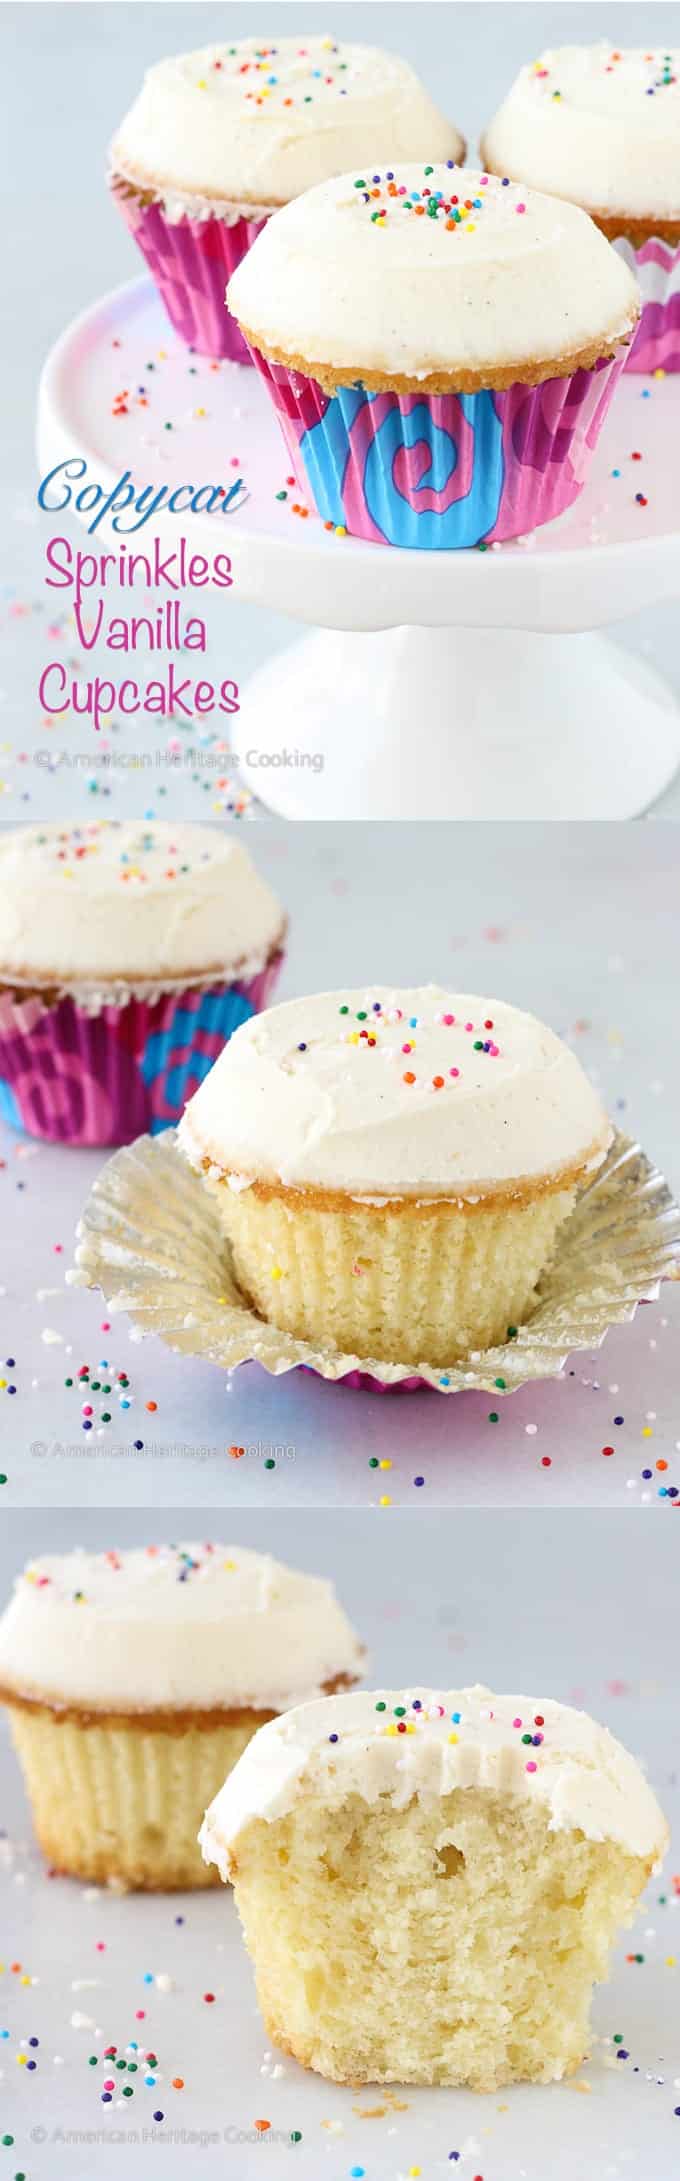 Sprinkles Copycat Vanilla Cupcakes Instagram Image